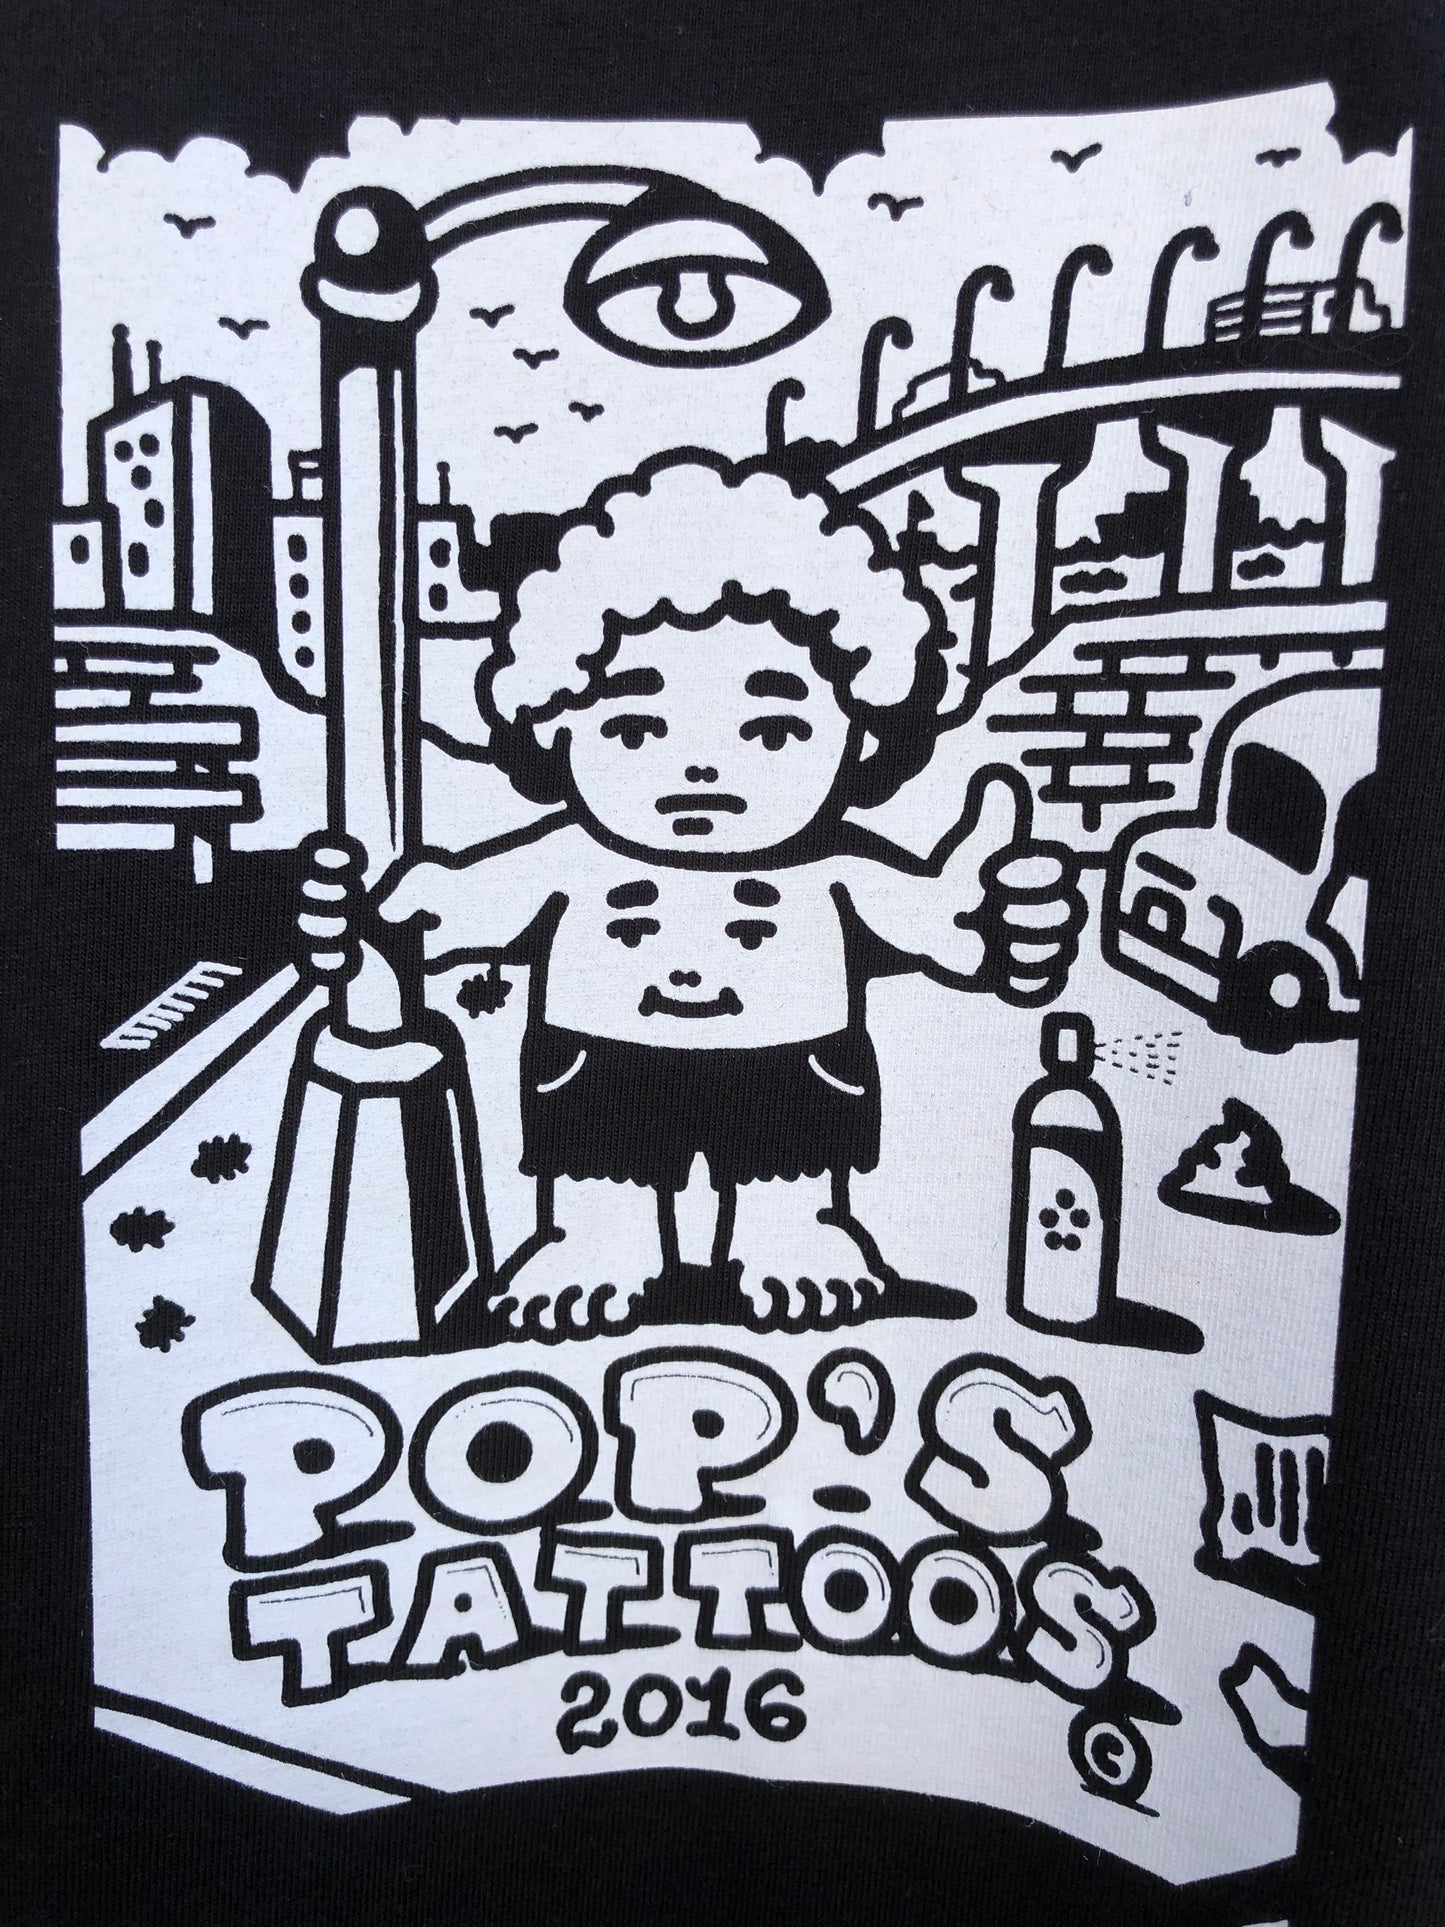 Pops Tattoos 2016 Shirt